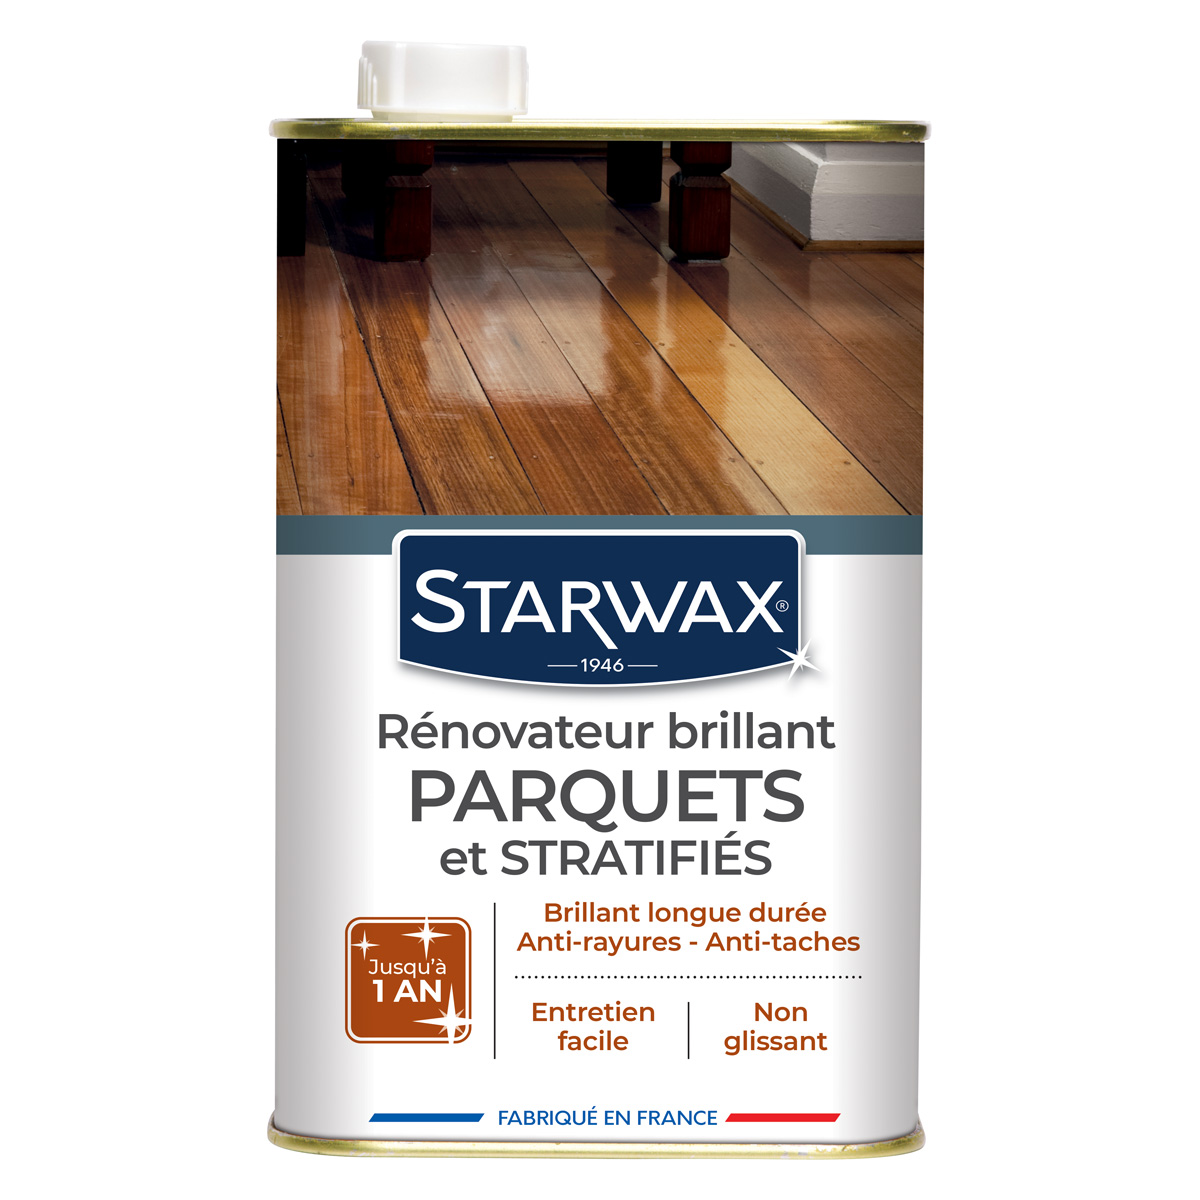 Starwax Parquet renovator gloss-finish